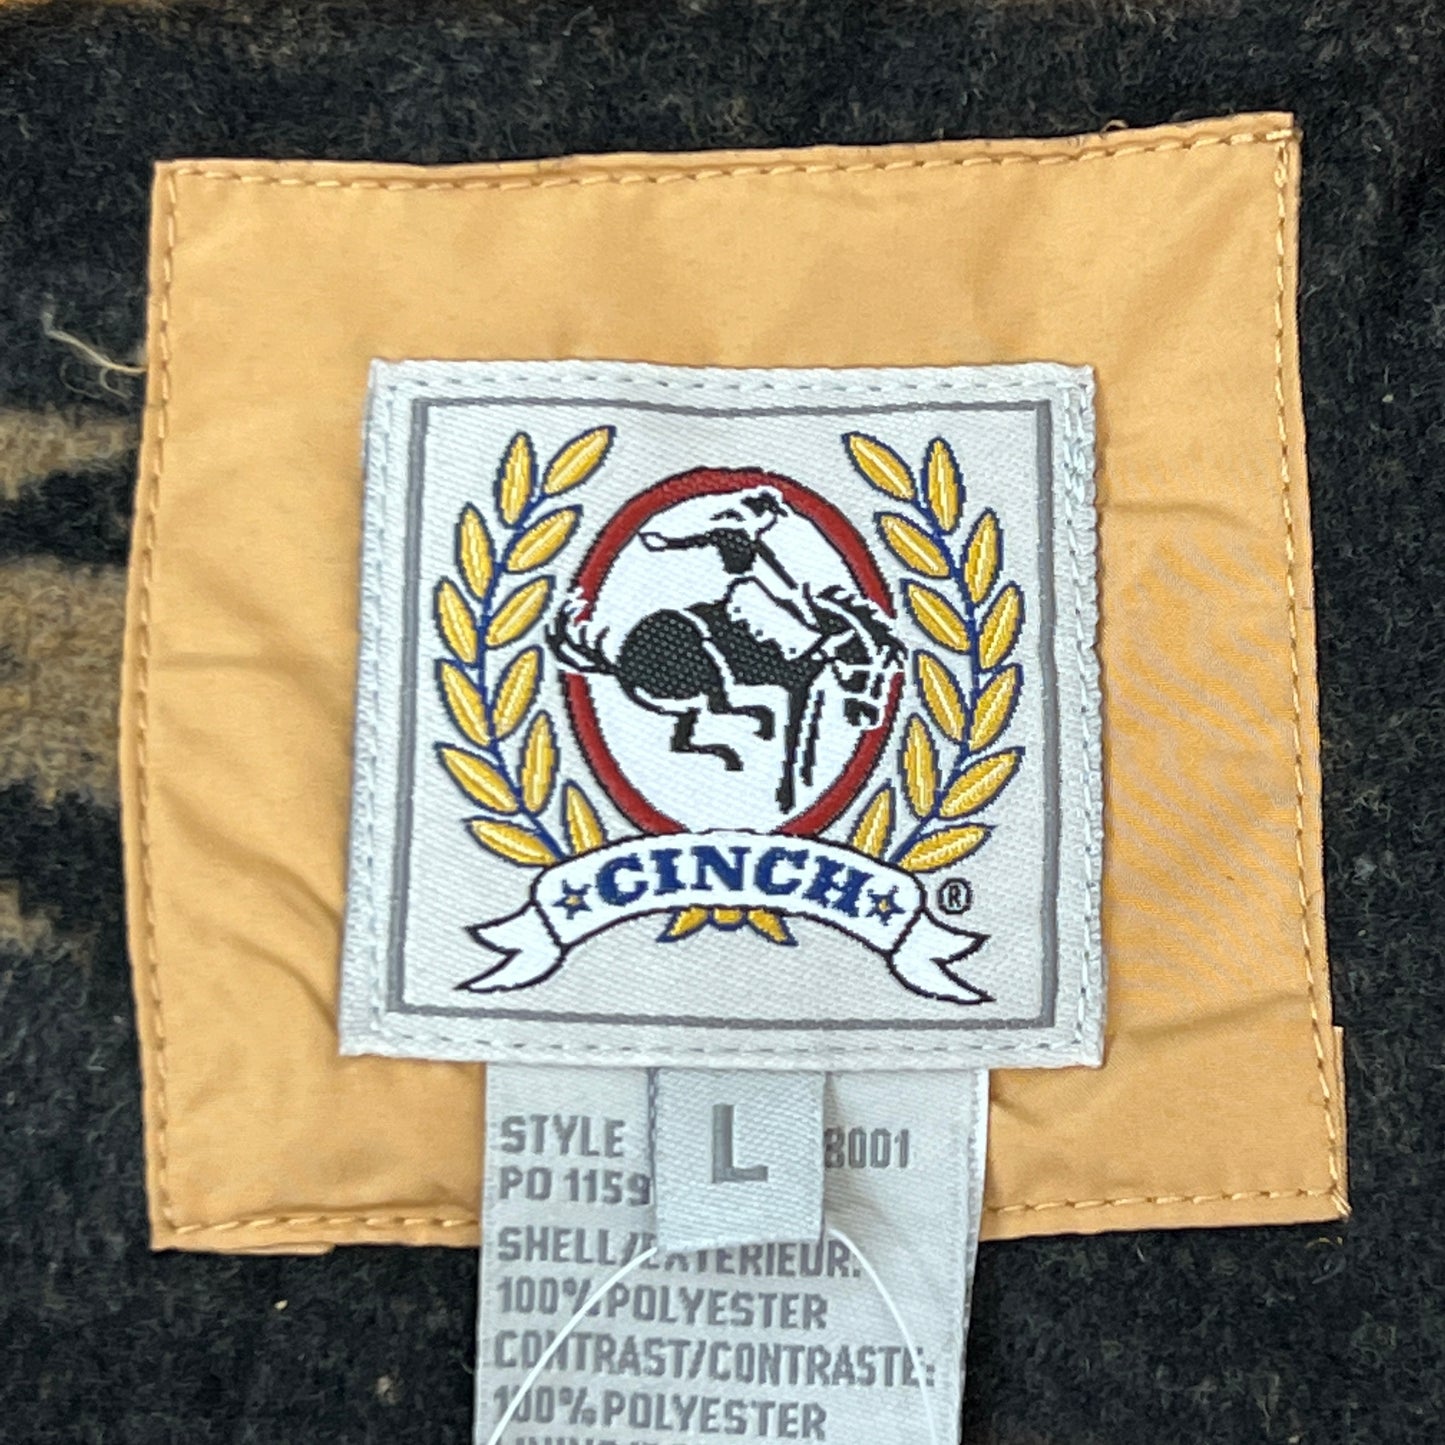 CINCH Quilted Vest Men's Sz L Gold/Brown MWV1578001 (New)